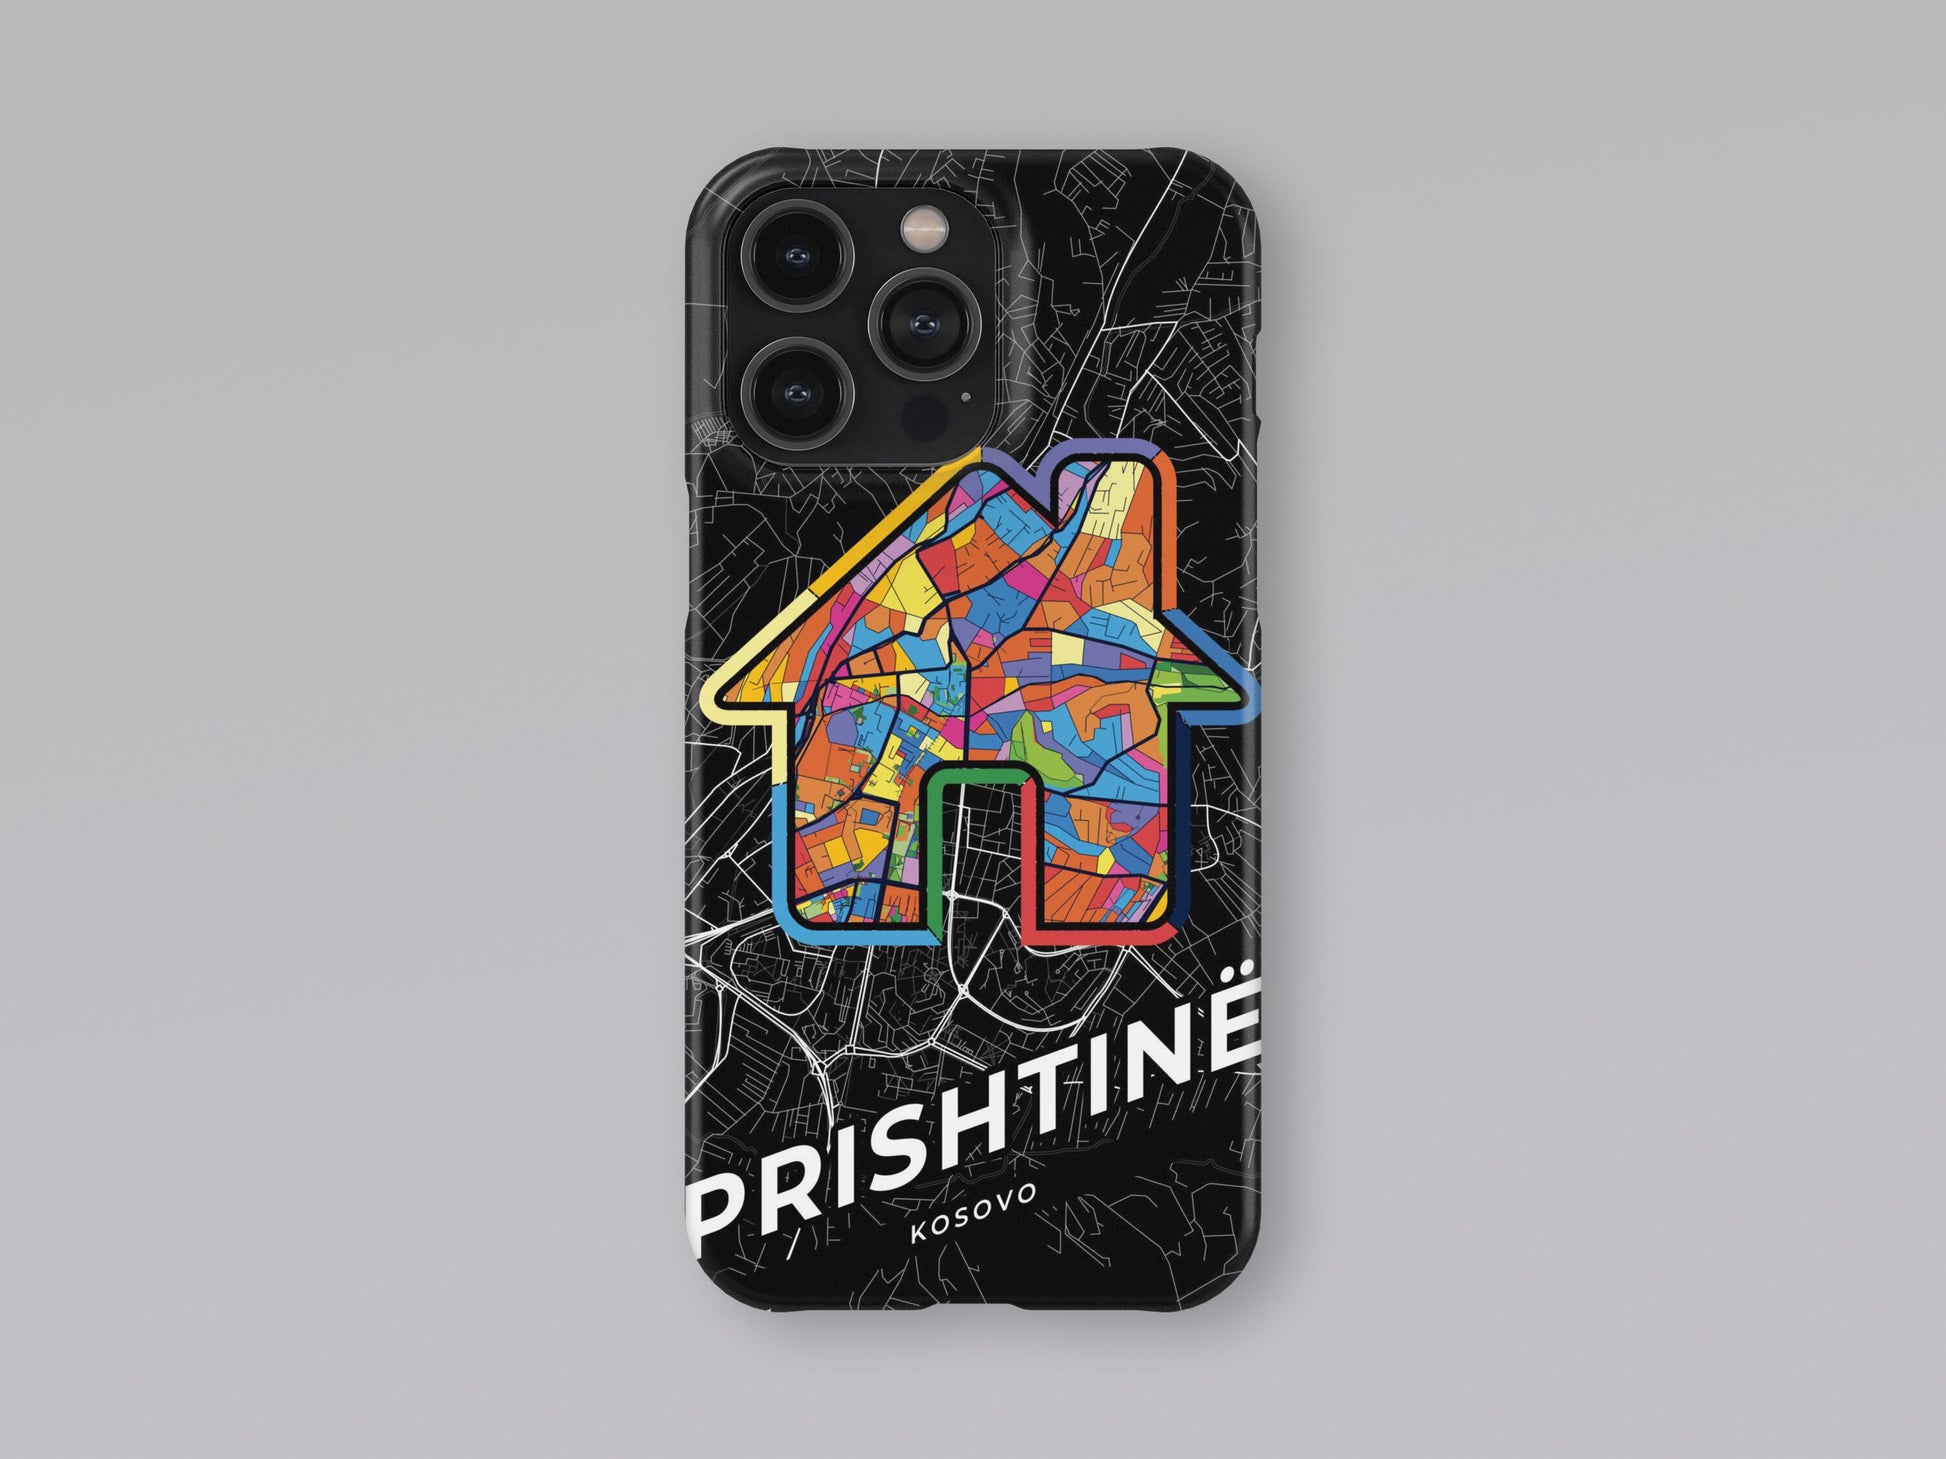 Prishtinë / Priština Kosovo slim phone case with colorful icon. Birthday, wedding or housewarming gift. Couple match cases. 3